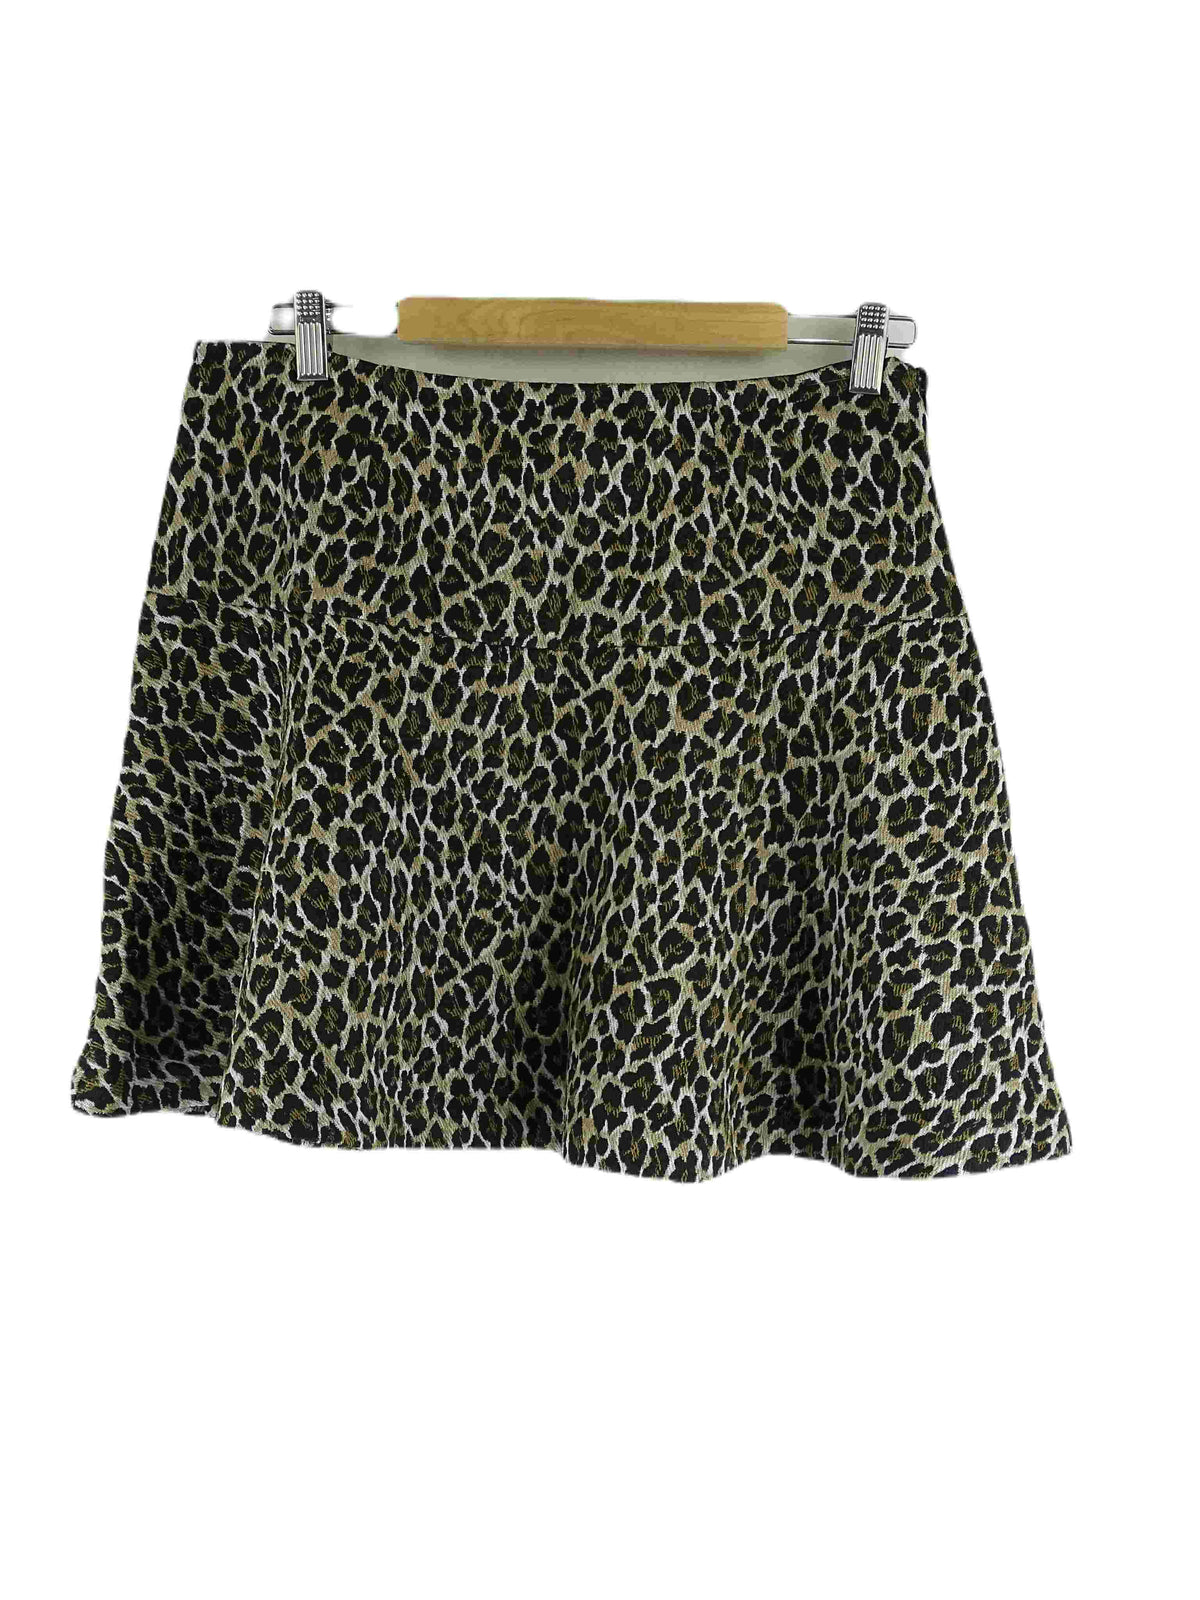 Piper Leopard Print Skirt 12